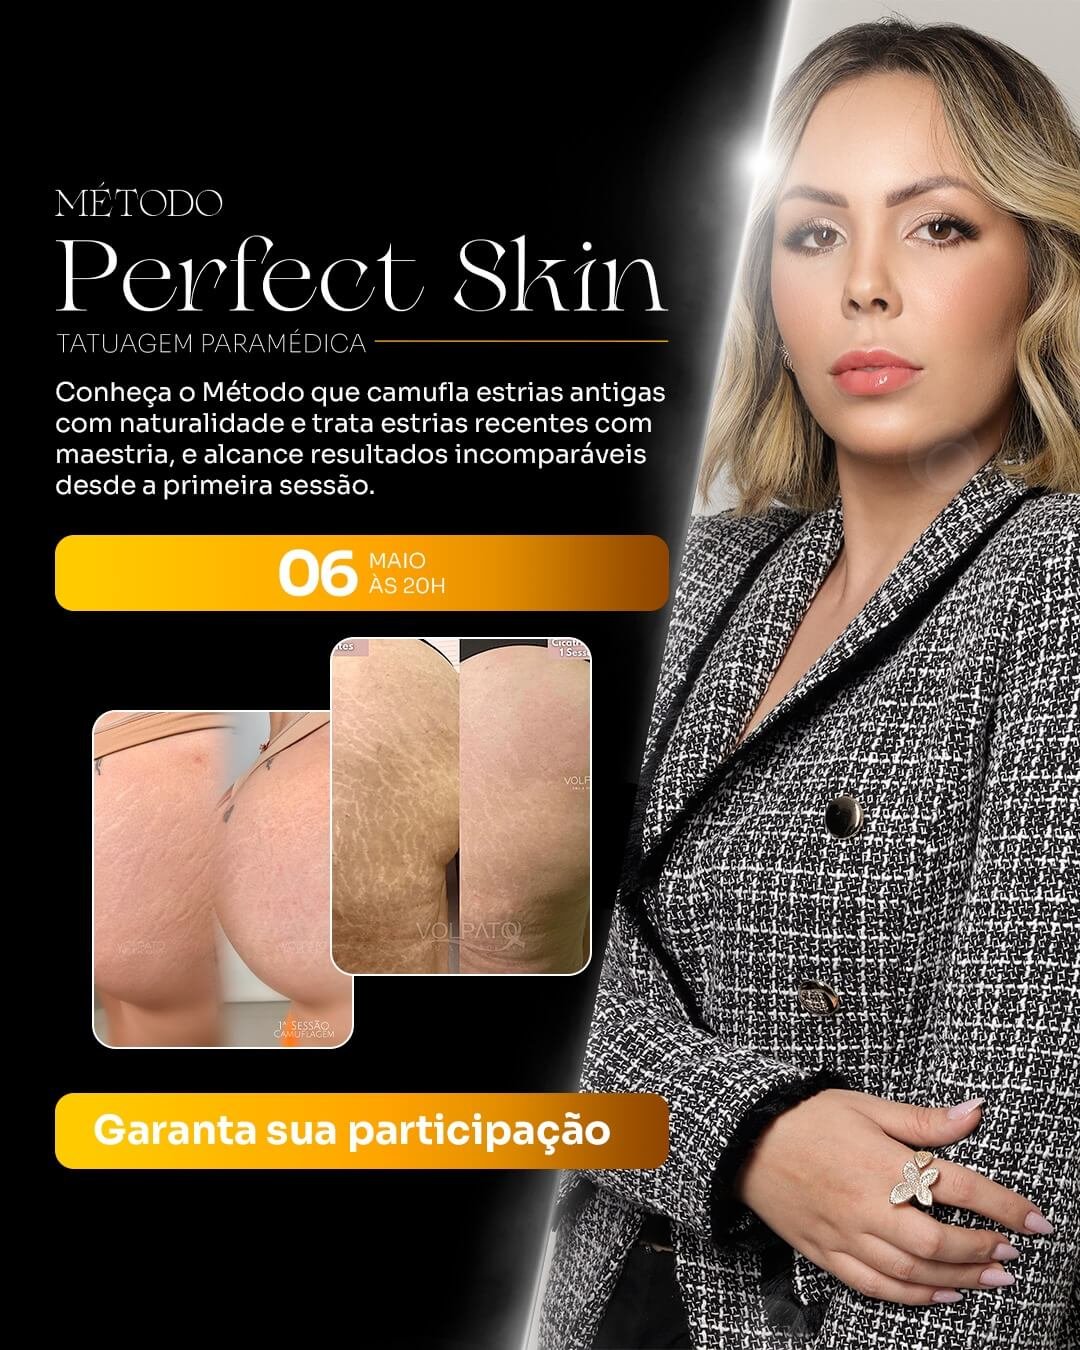 Perfect skin - Nathallya Volpato